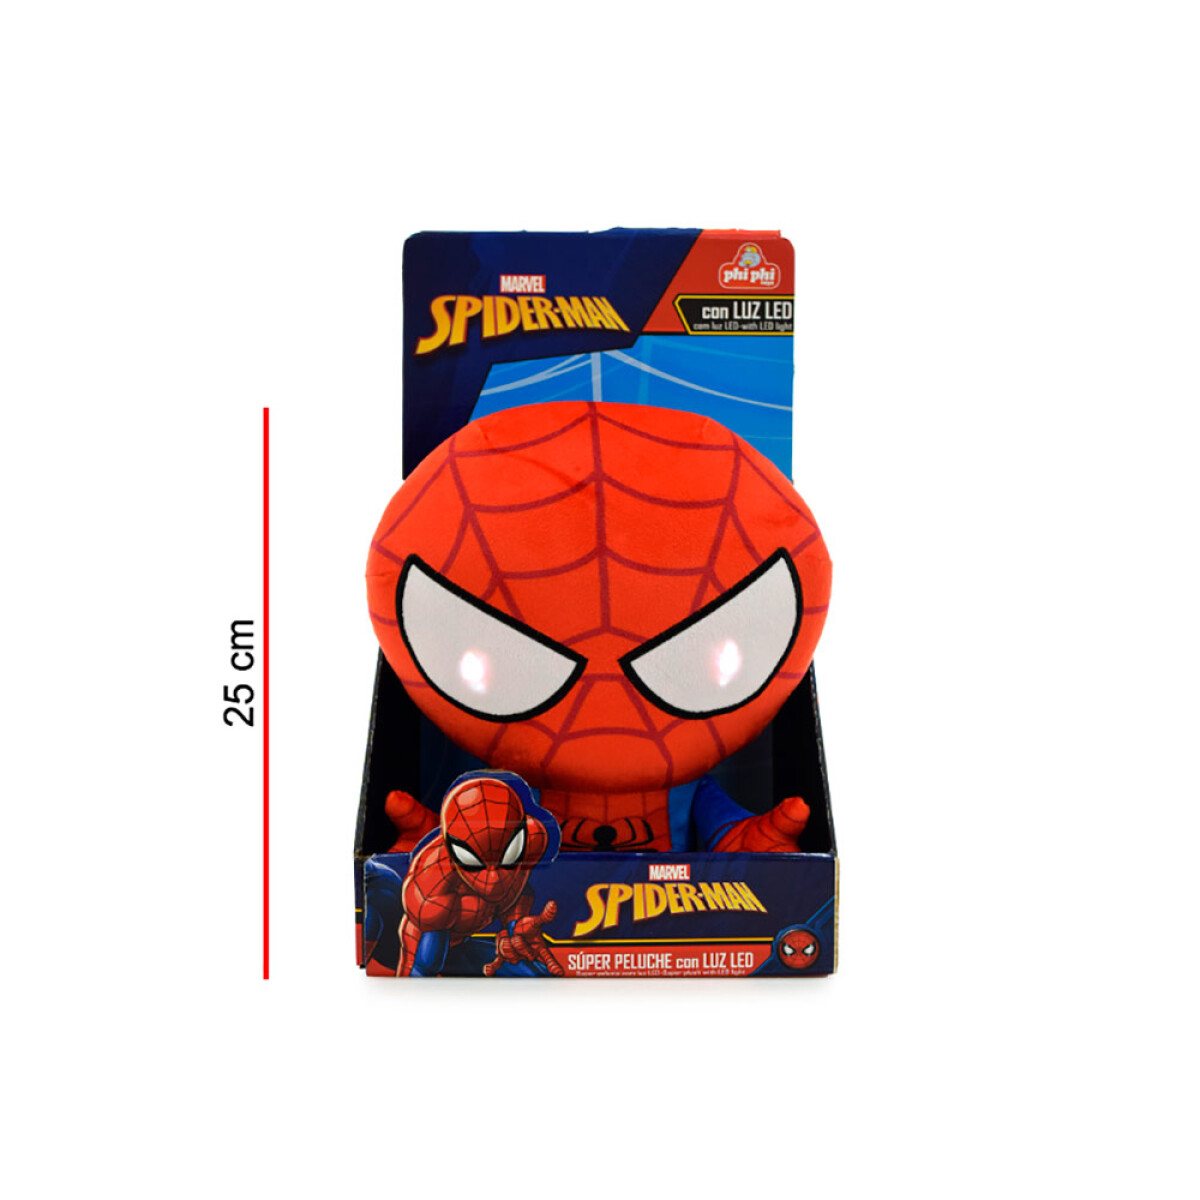 Peluche Marvel Avengers Spiderman con luz led 25cm - 001 